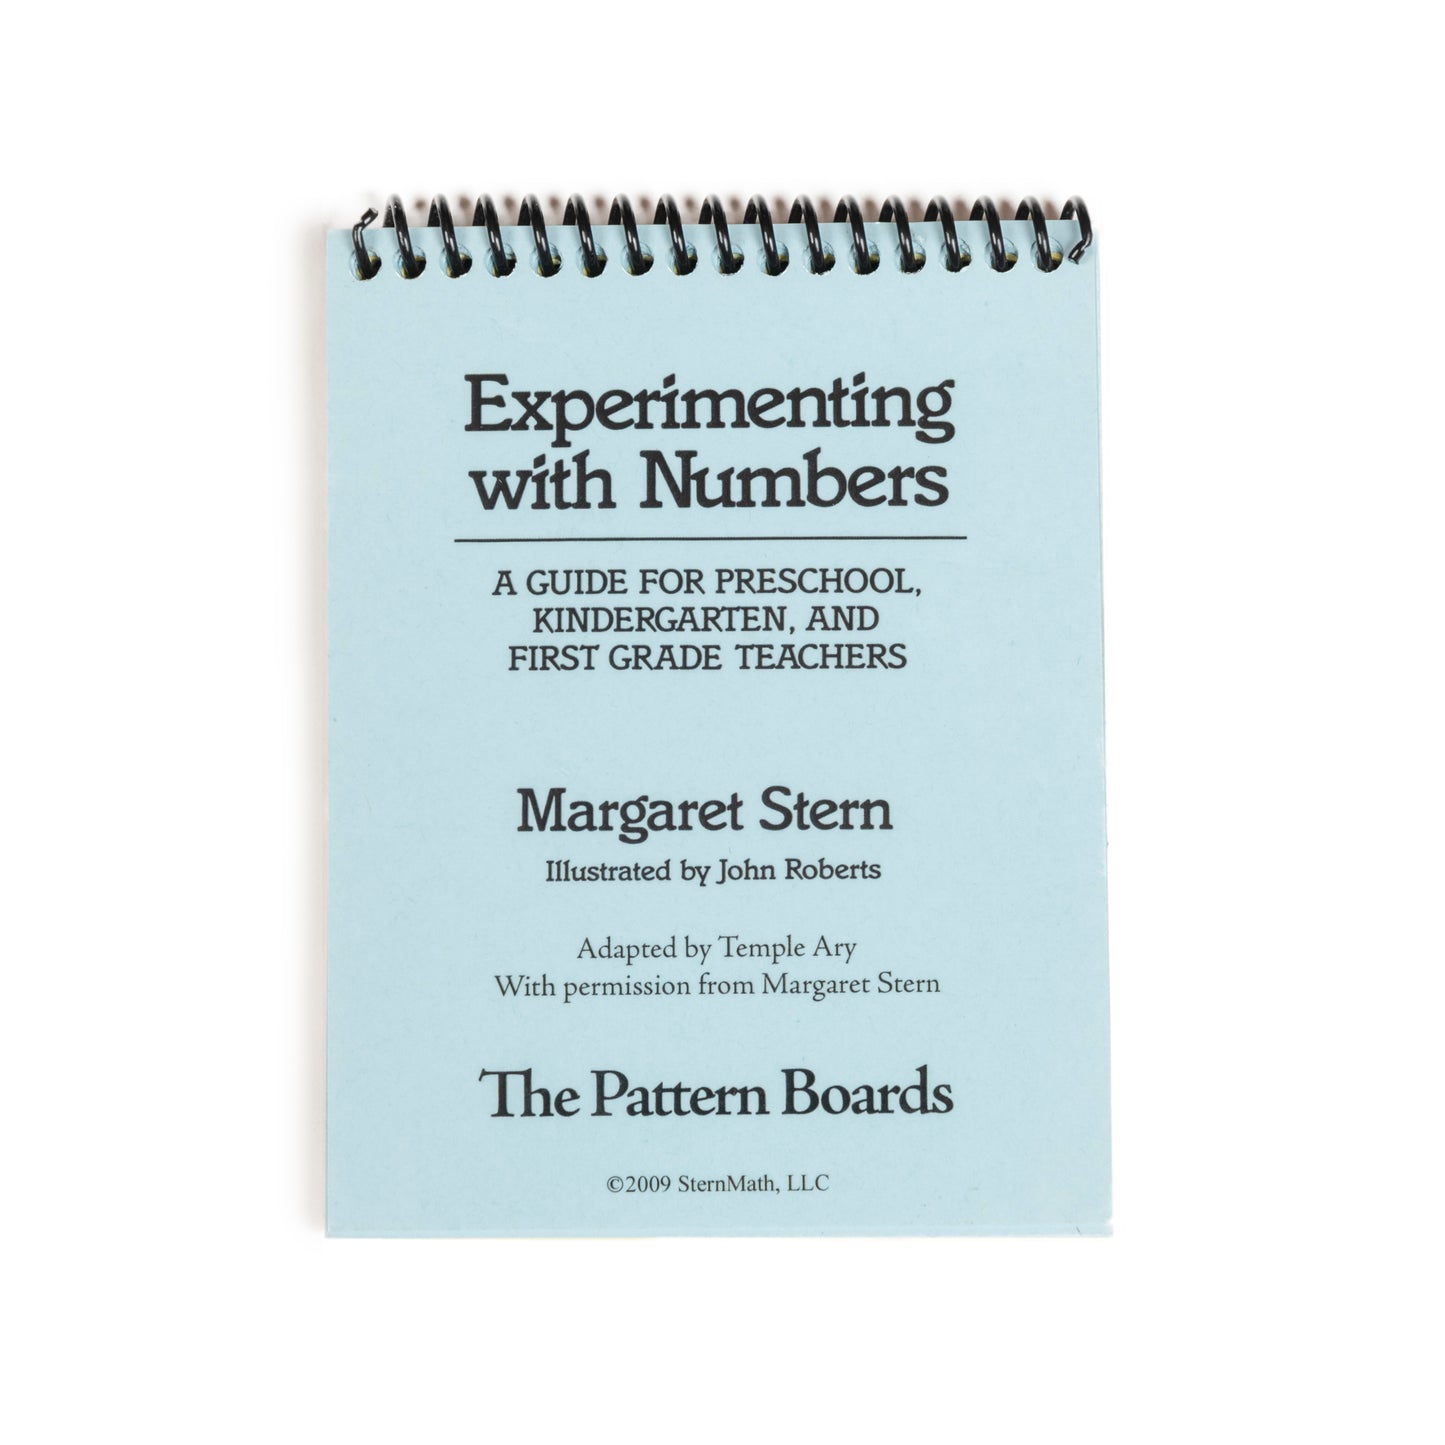 Pocket-sized flip book: The Pattern Boards